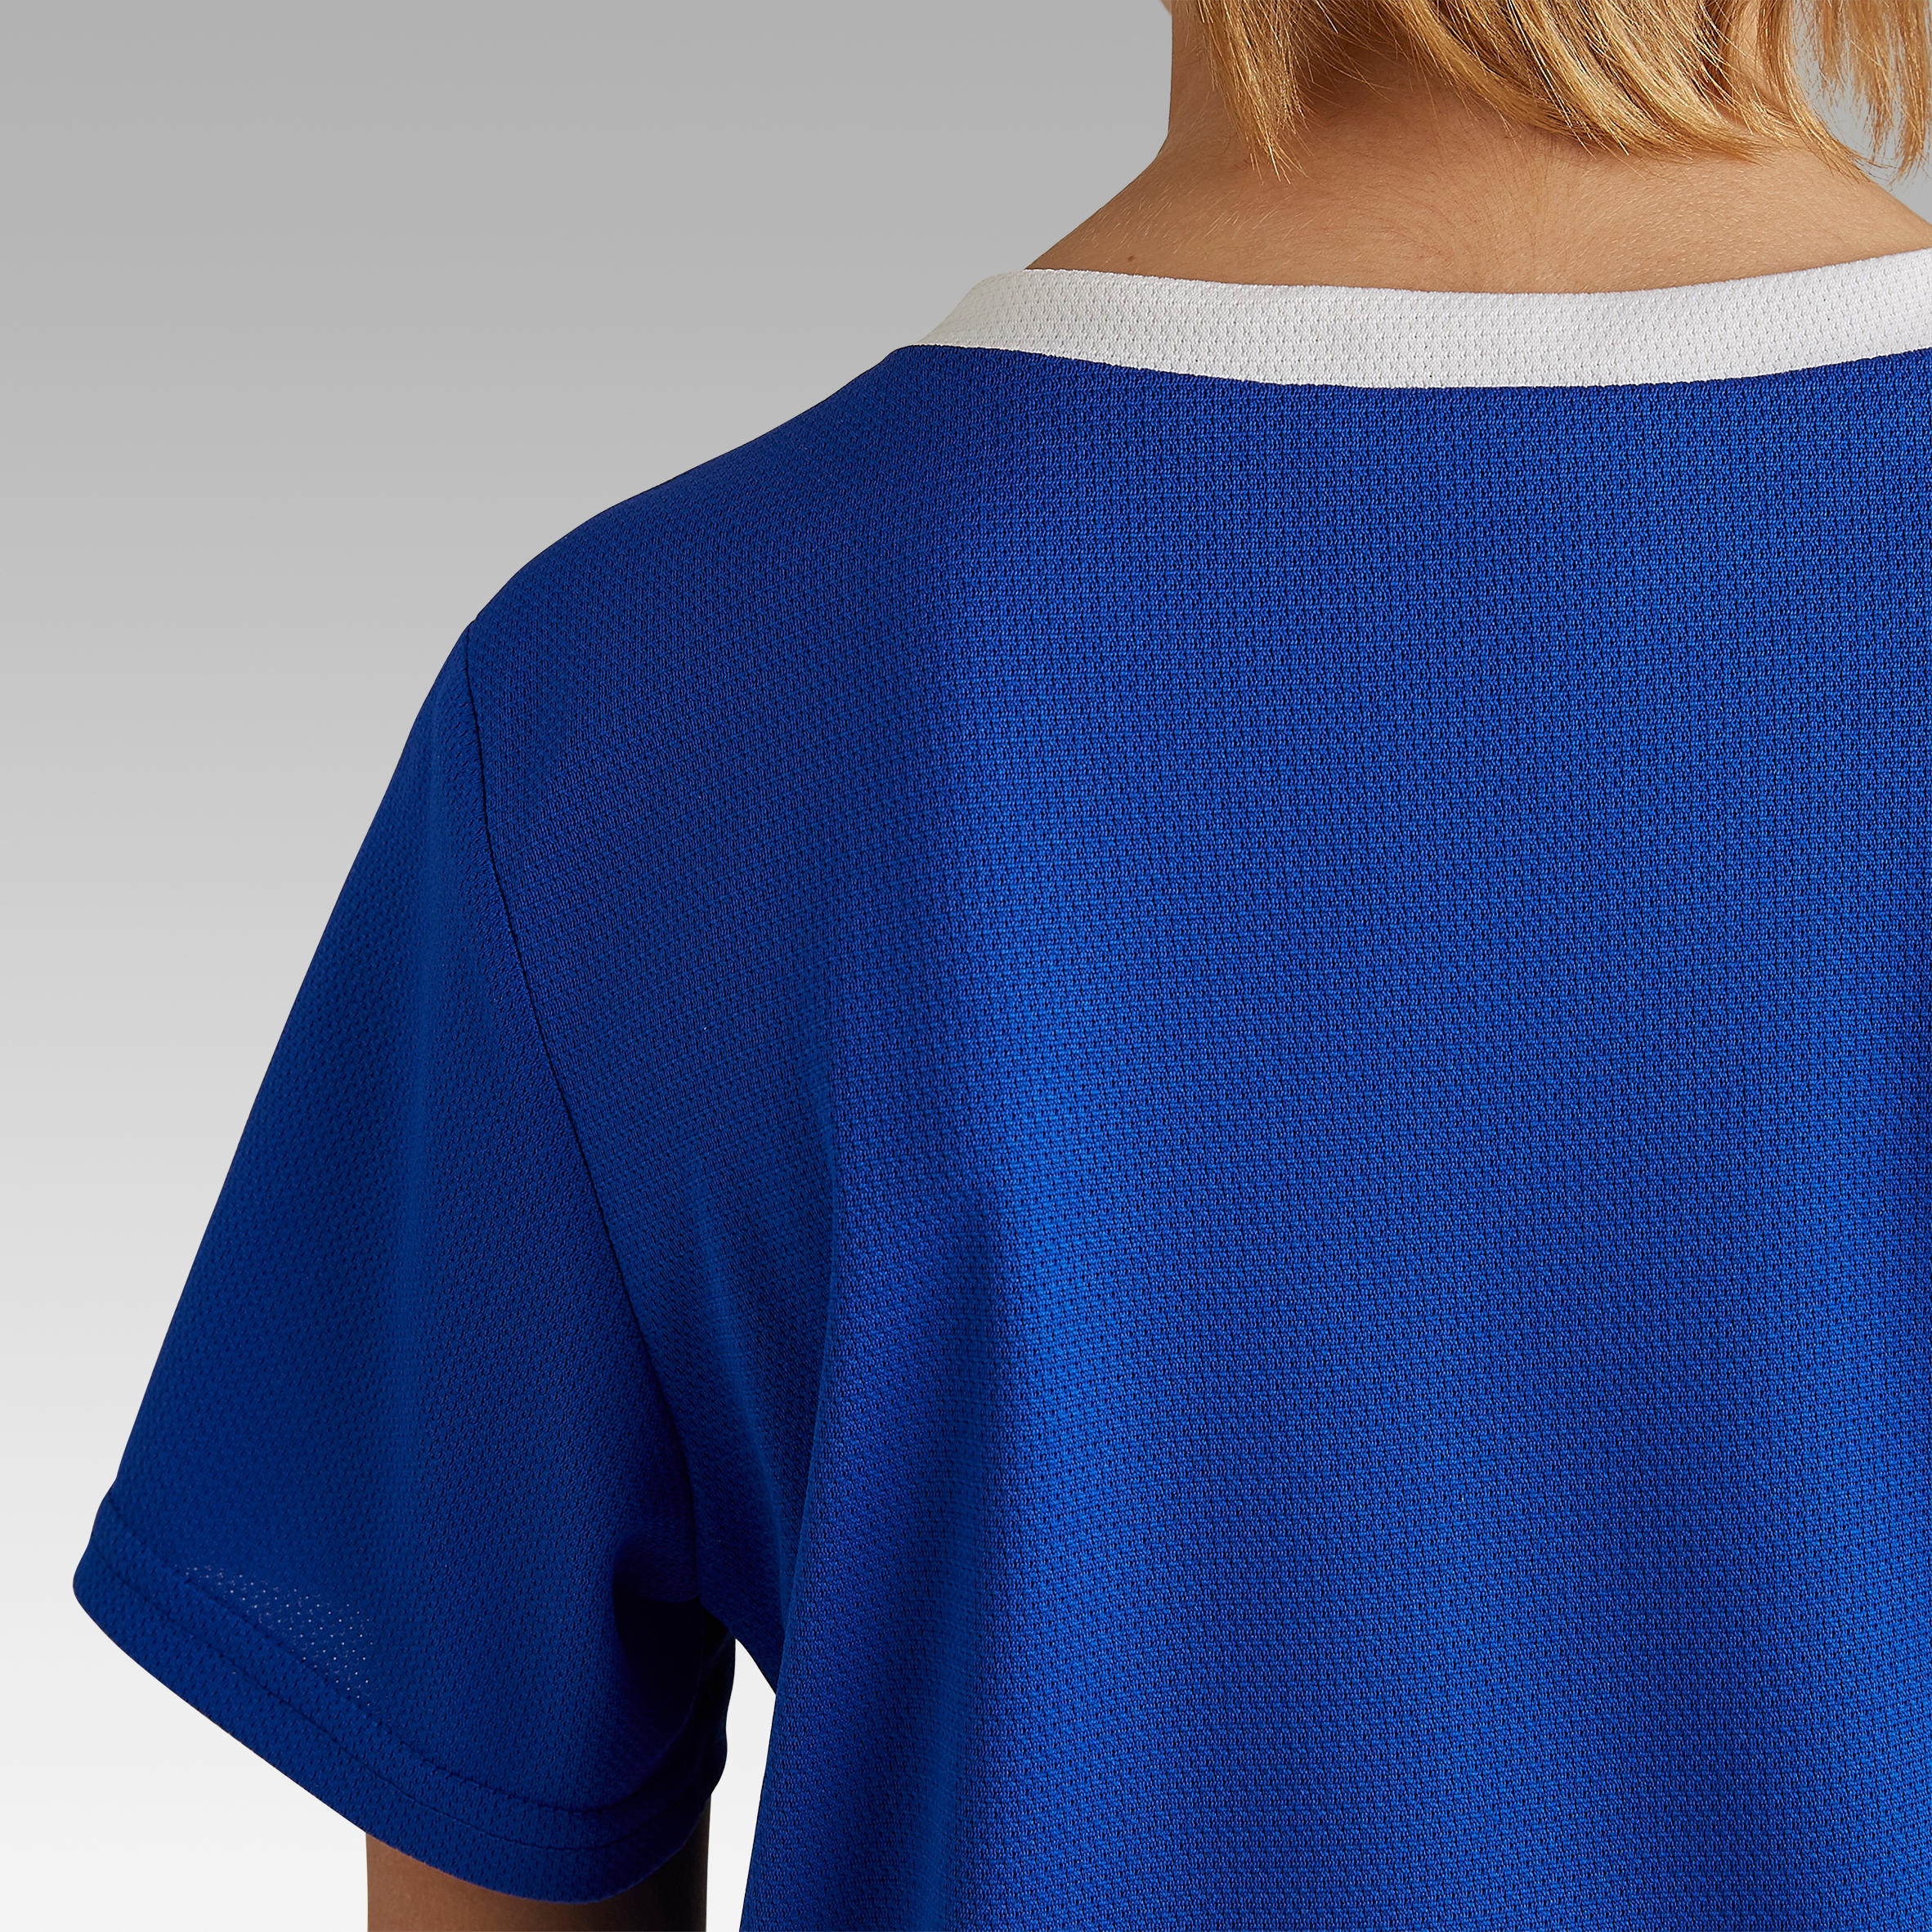 F100 Kids' Football Shirt - Indigo Blue 7/8